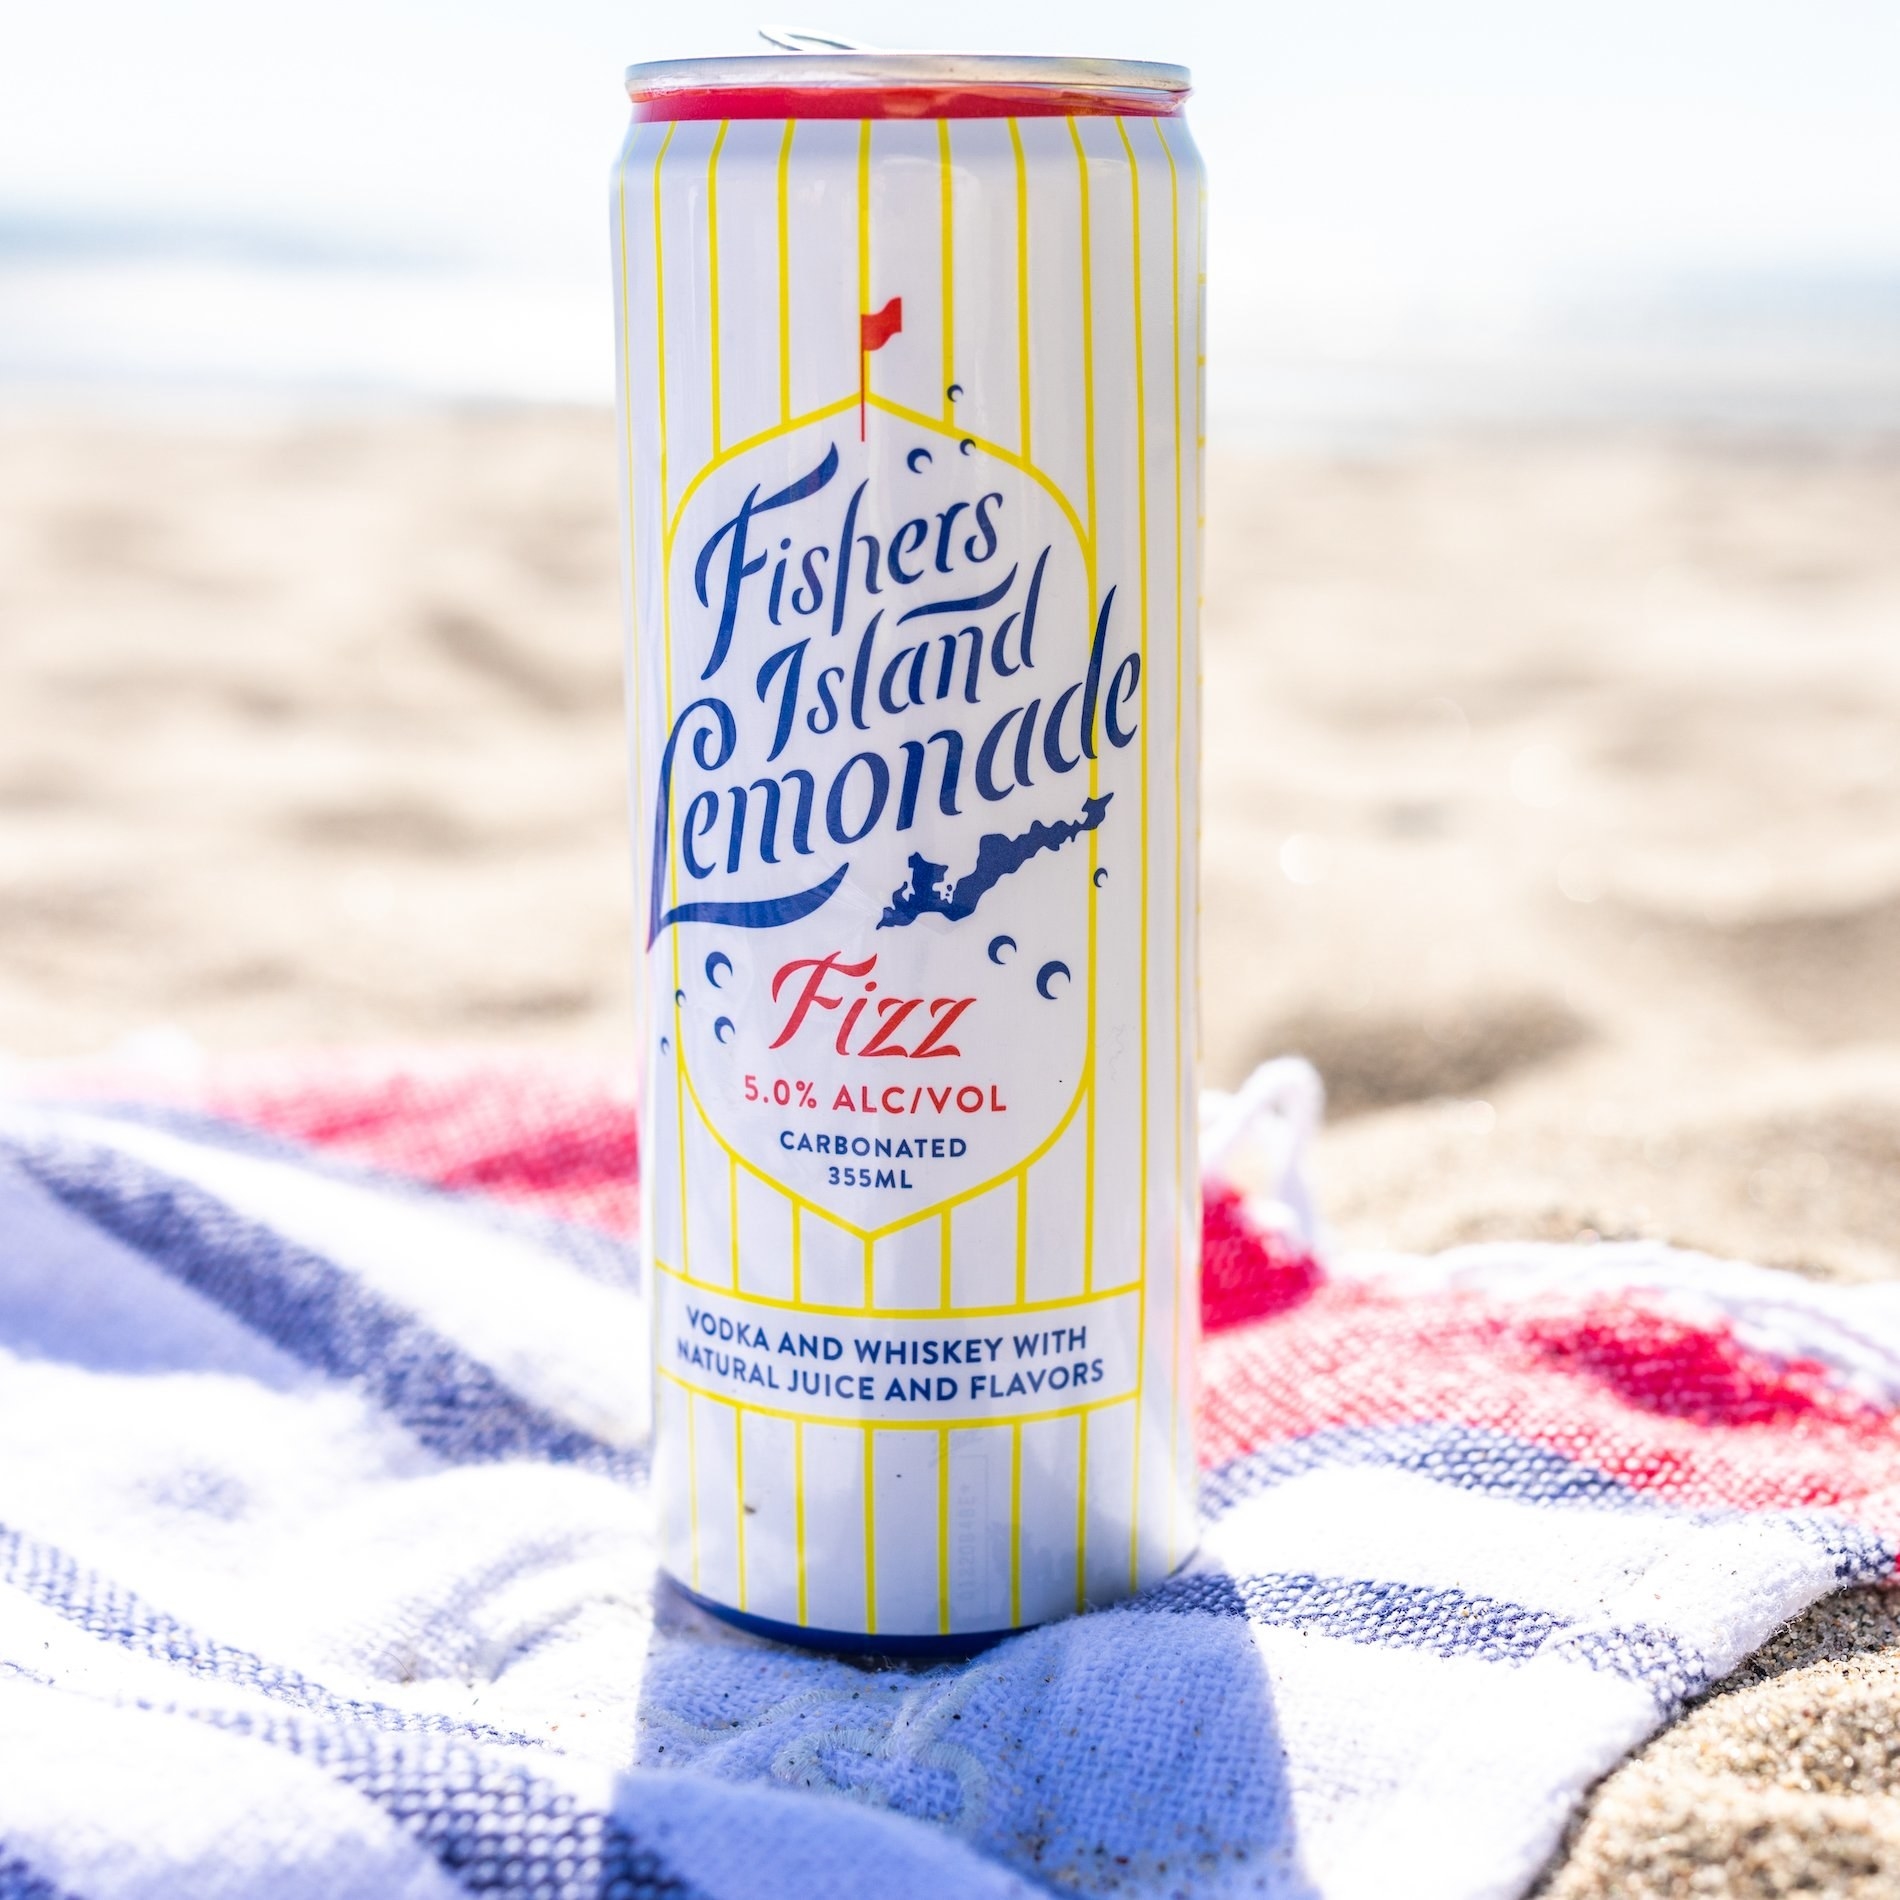 a can of fishers island lemonade fizz on a towel on a sandy beach